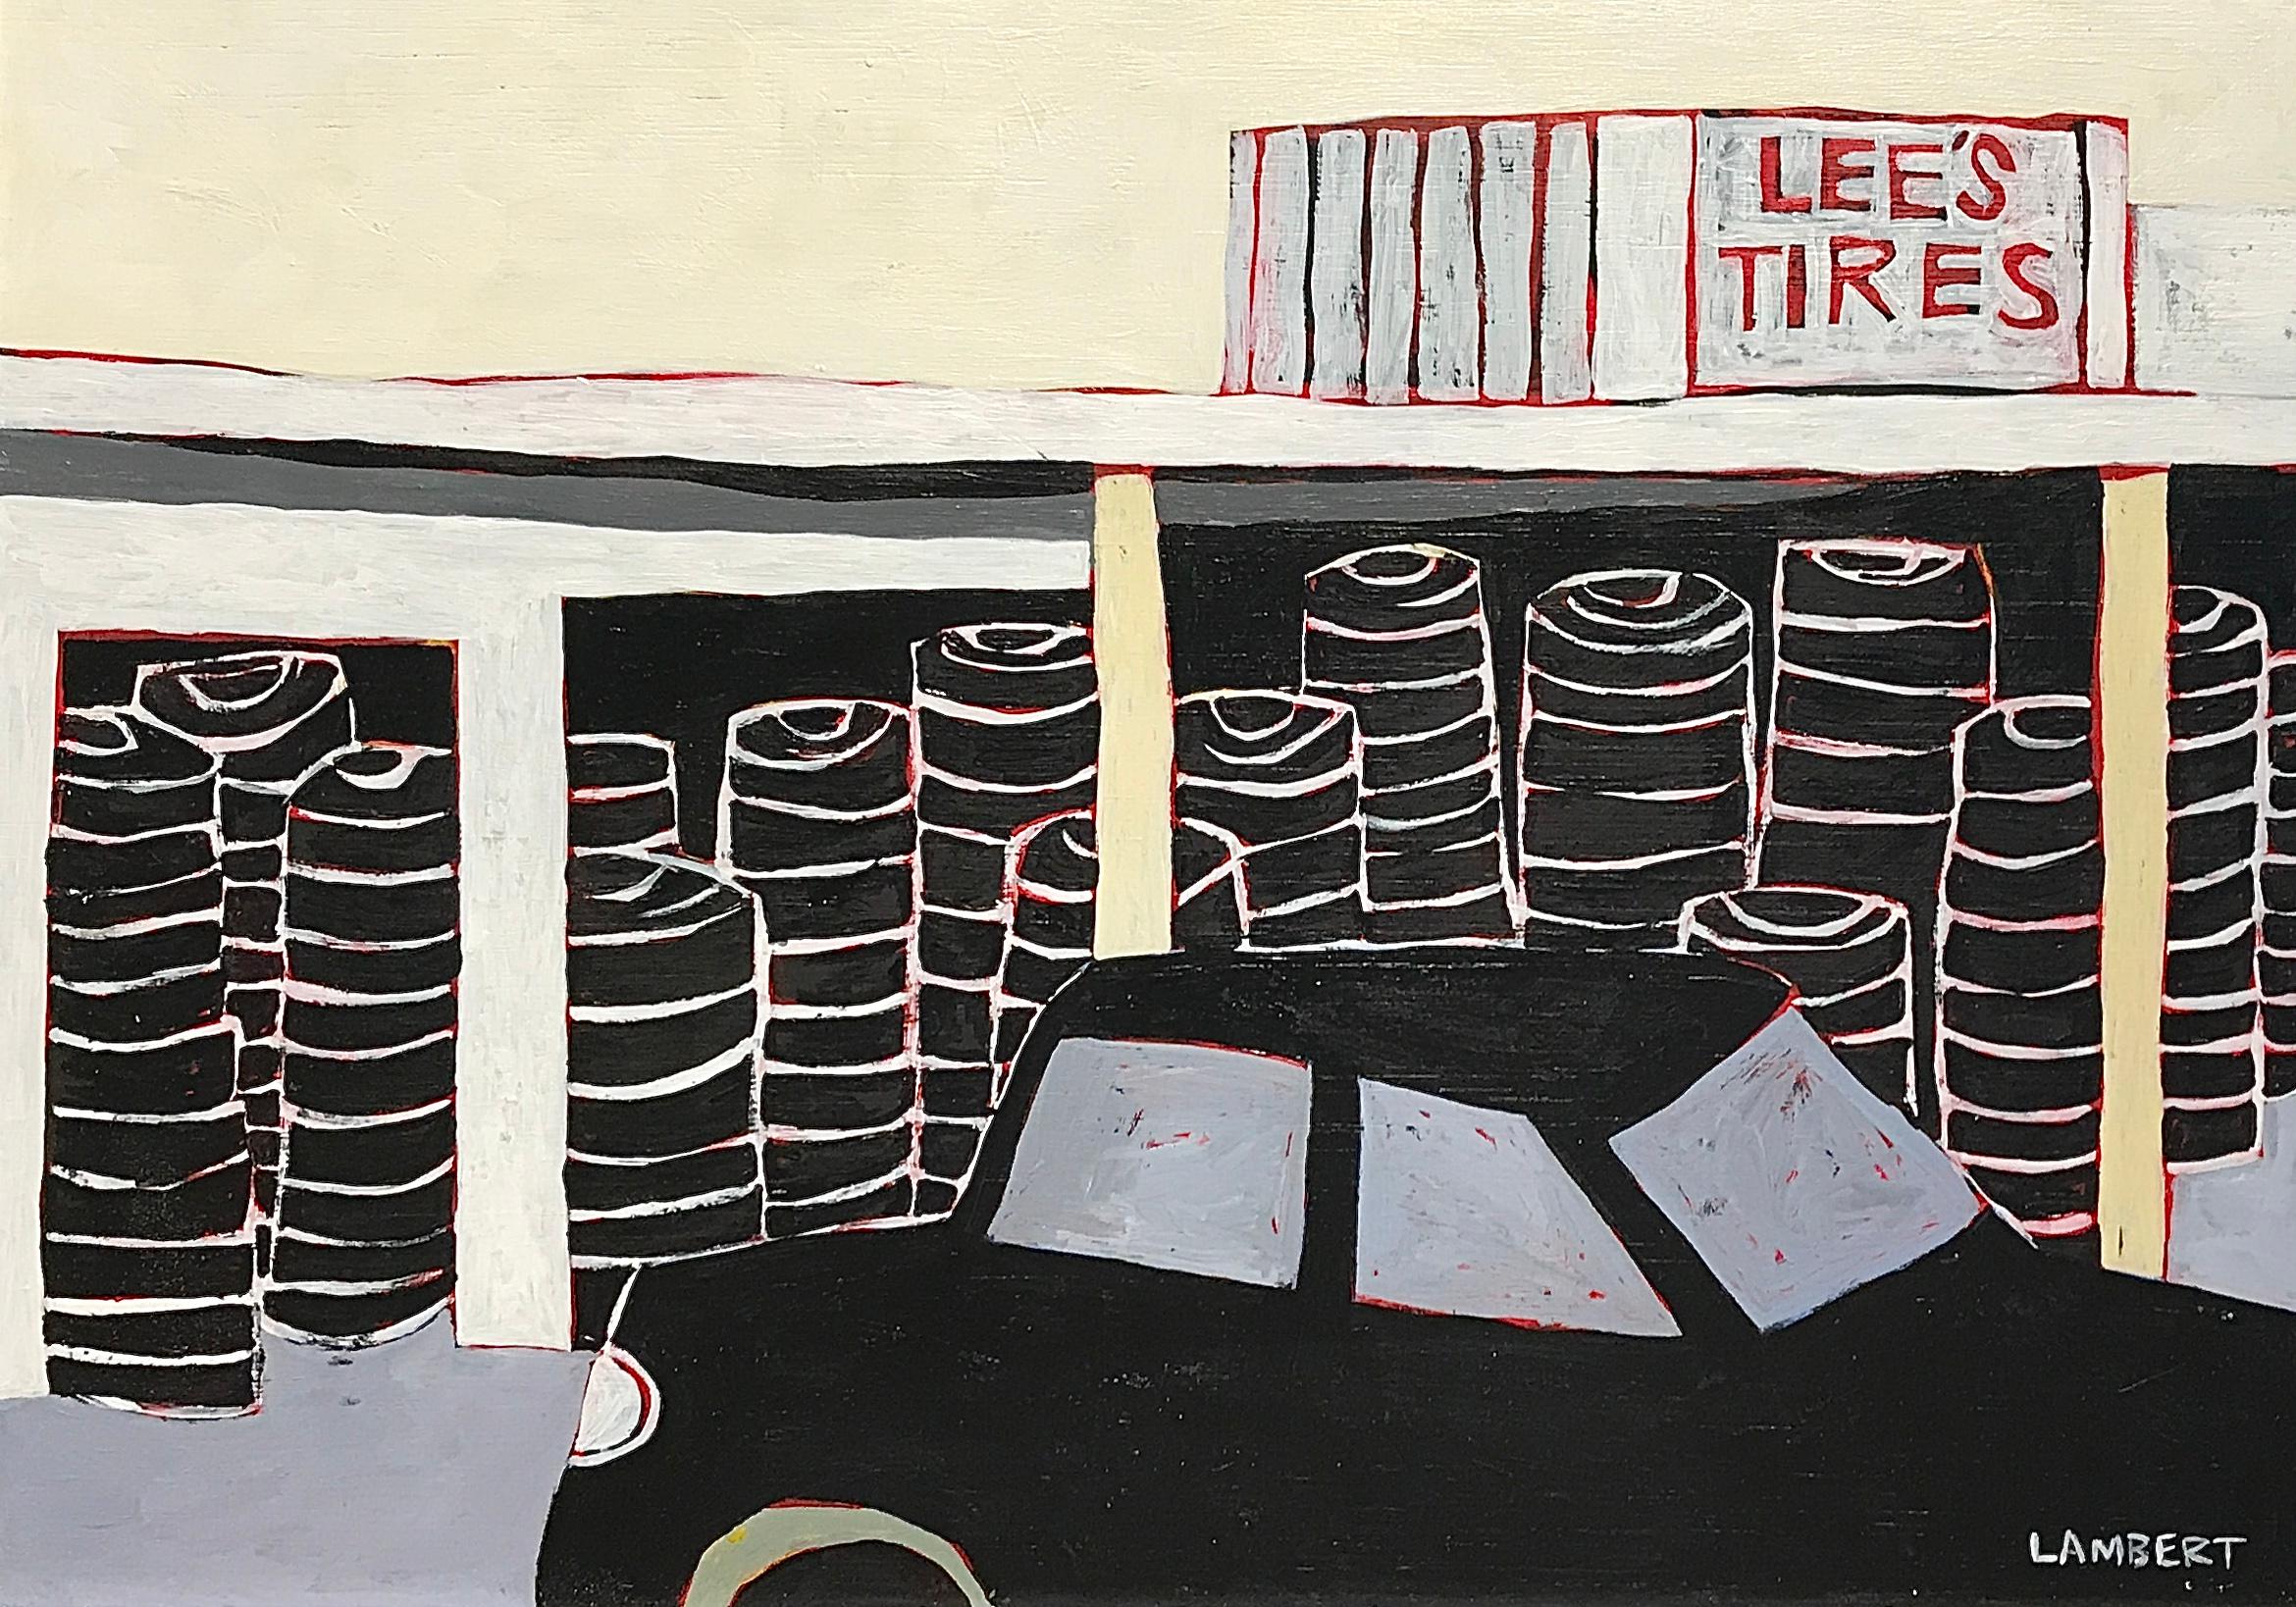 Lee's Tire Shop - Painting by David Lambert